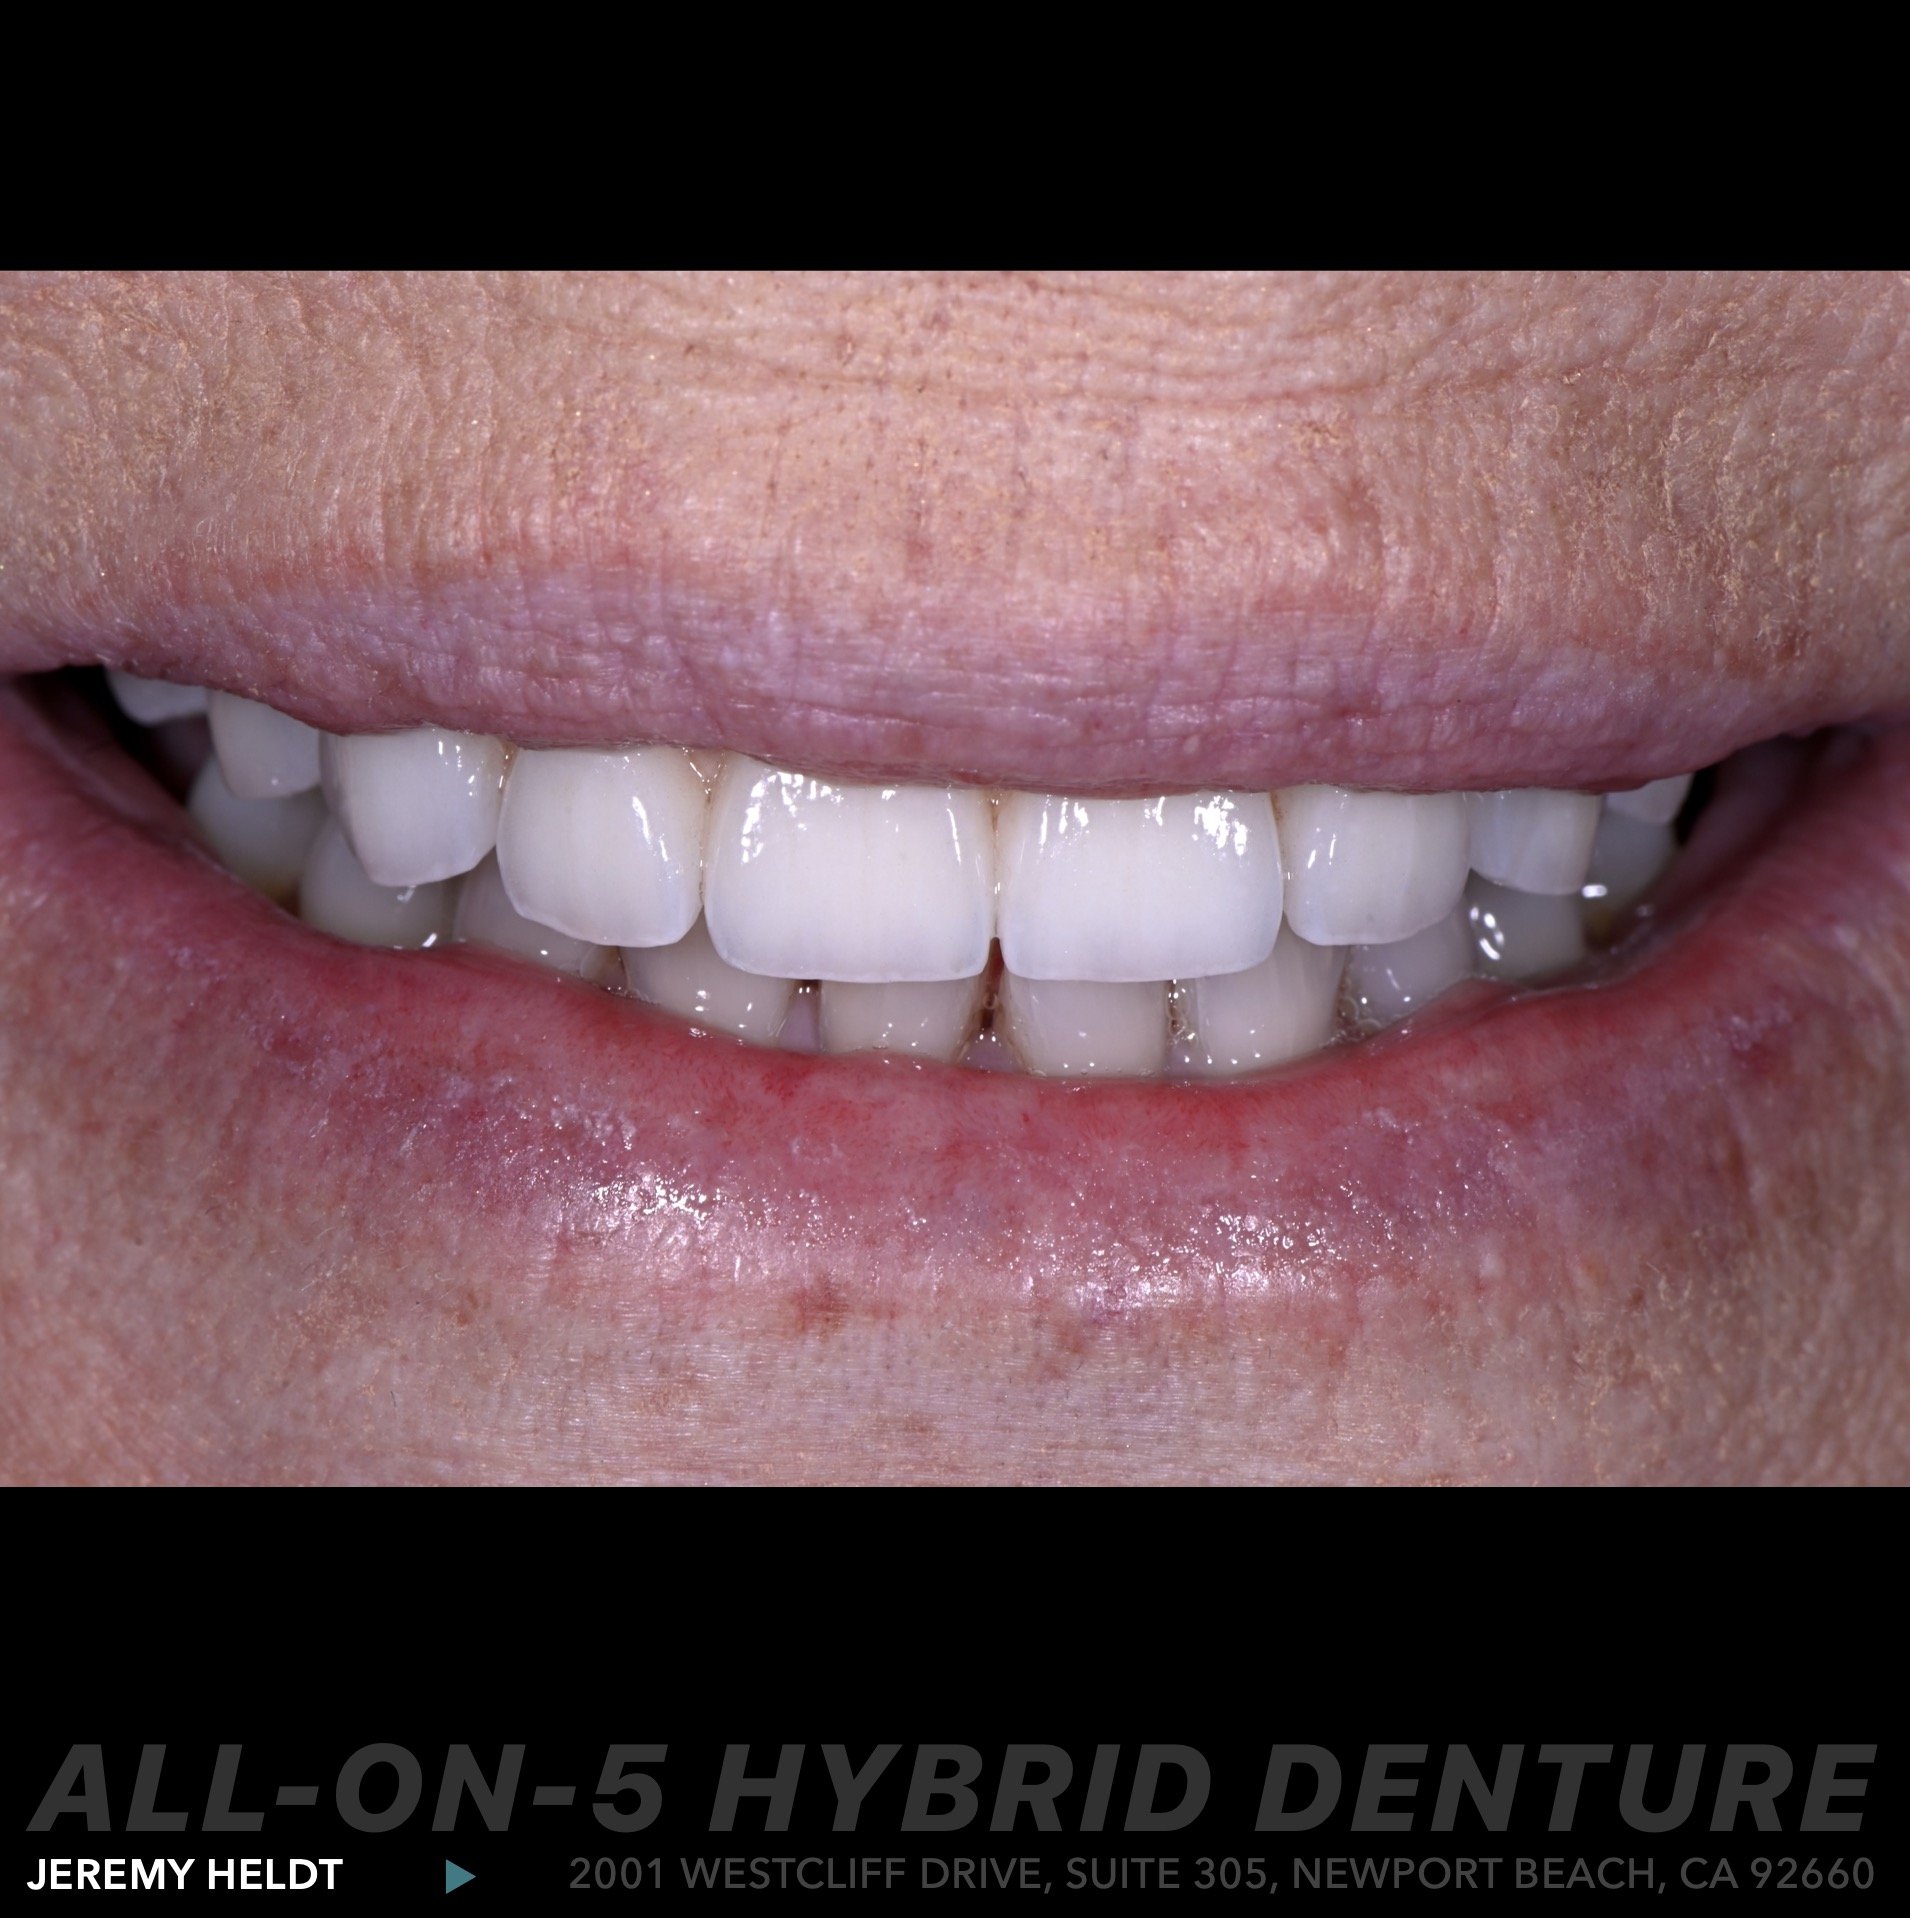 All-on-4 Hybrid Denture Newport Beach by Jeremy Heldt, DDS.  Implant Dentist.  Cosmetic Dentist.